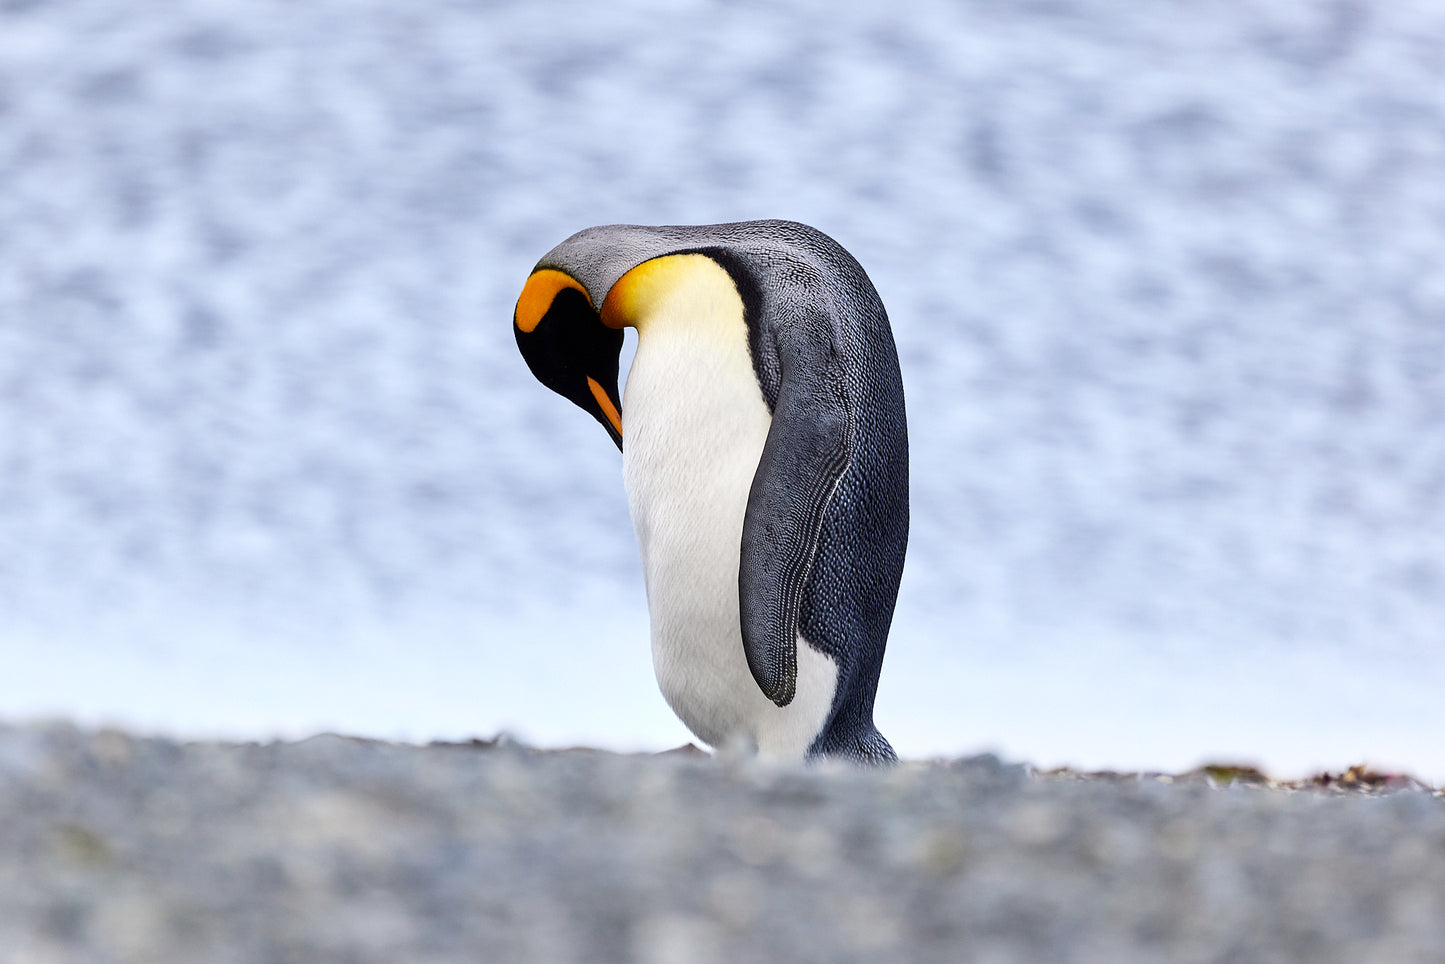 Take a bow - King Penguin, Macquarie Island